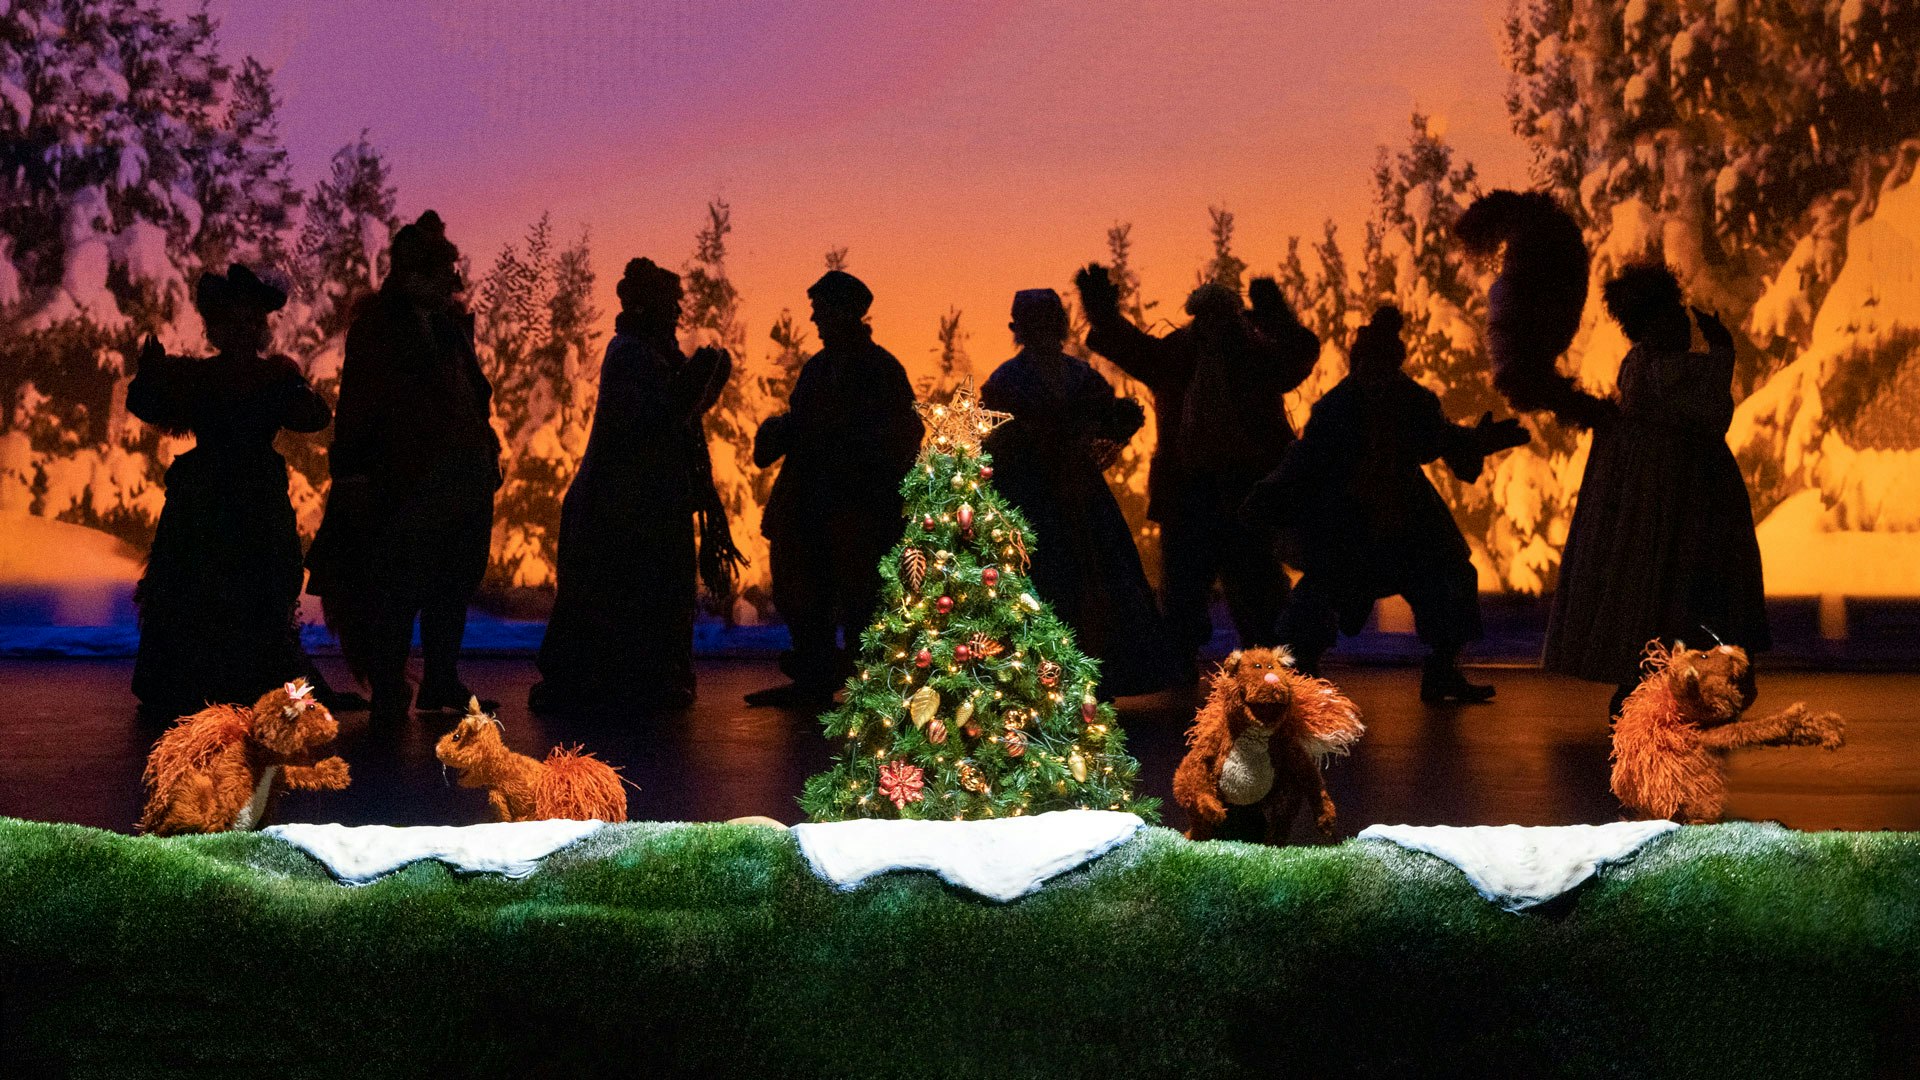 Emmet Otter's Jug-Band Christmas: On Demand